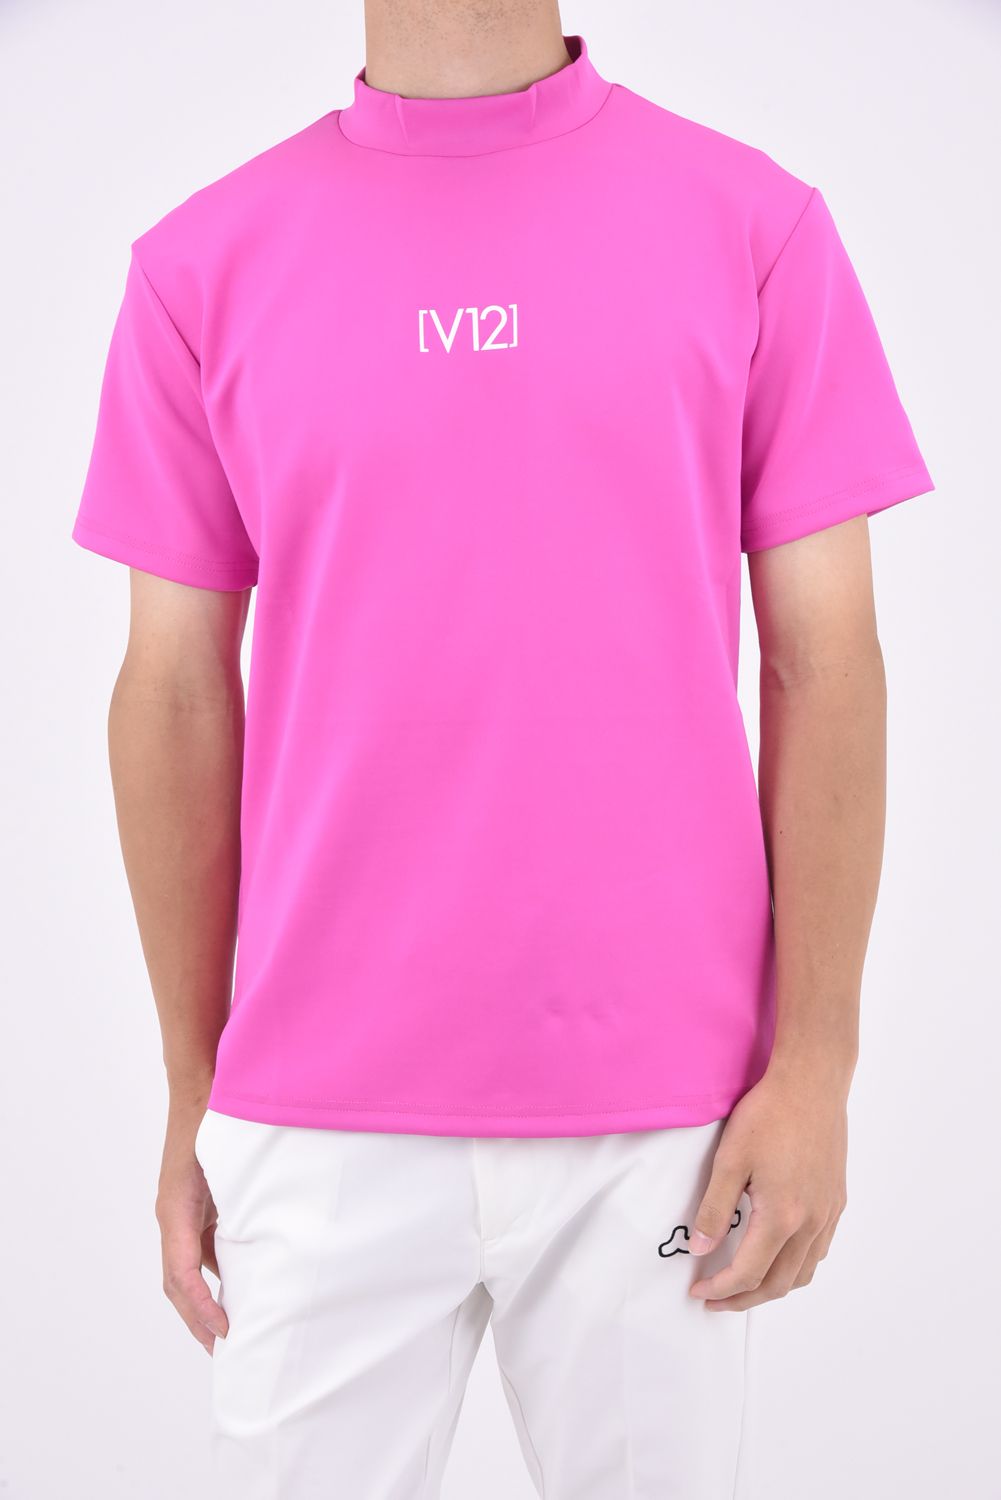 V12 - TONE MOCK / バックロゴ 半袖 モックネックTシャツ ピンク